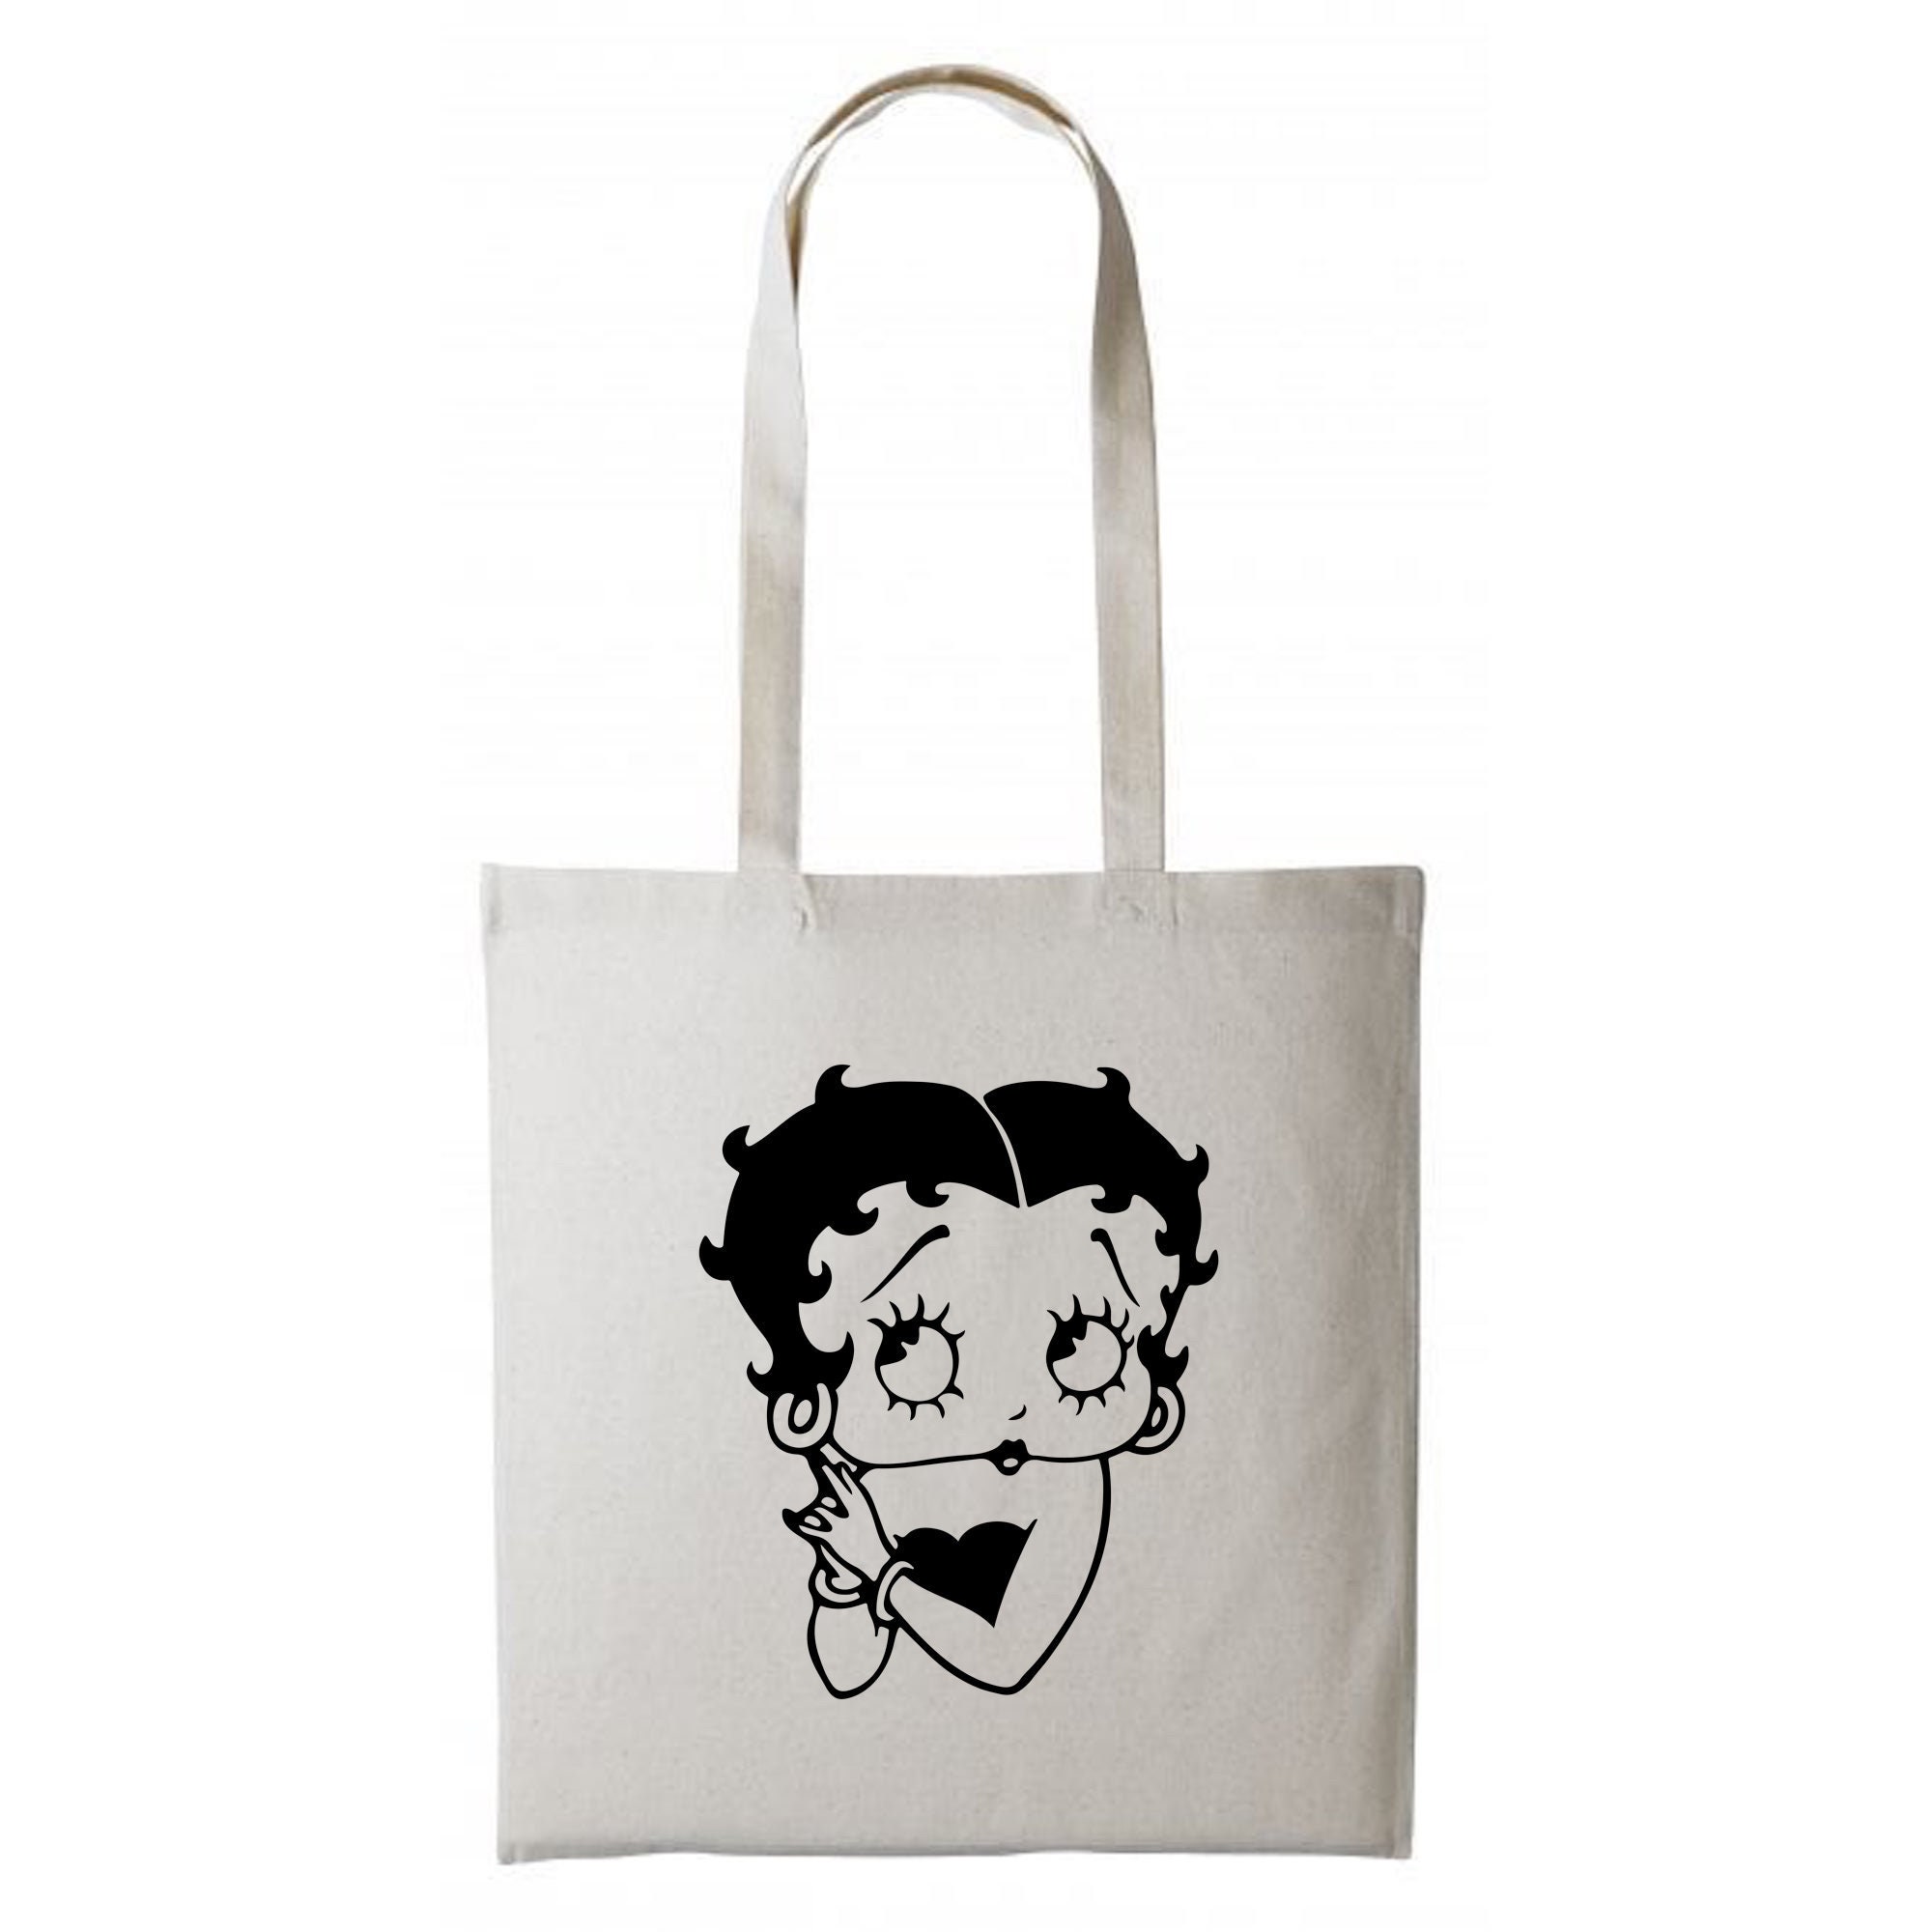 Betty Boop Tote Purse bag, clear with multi print- Tan handles and trim-B  zipper